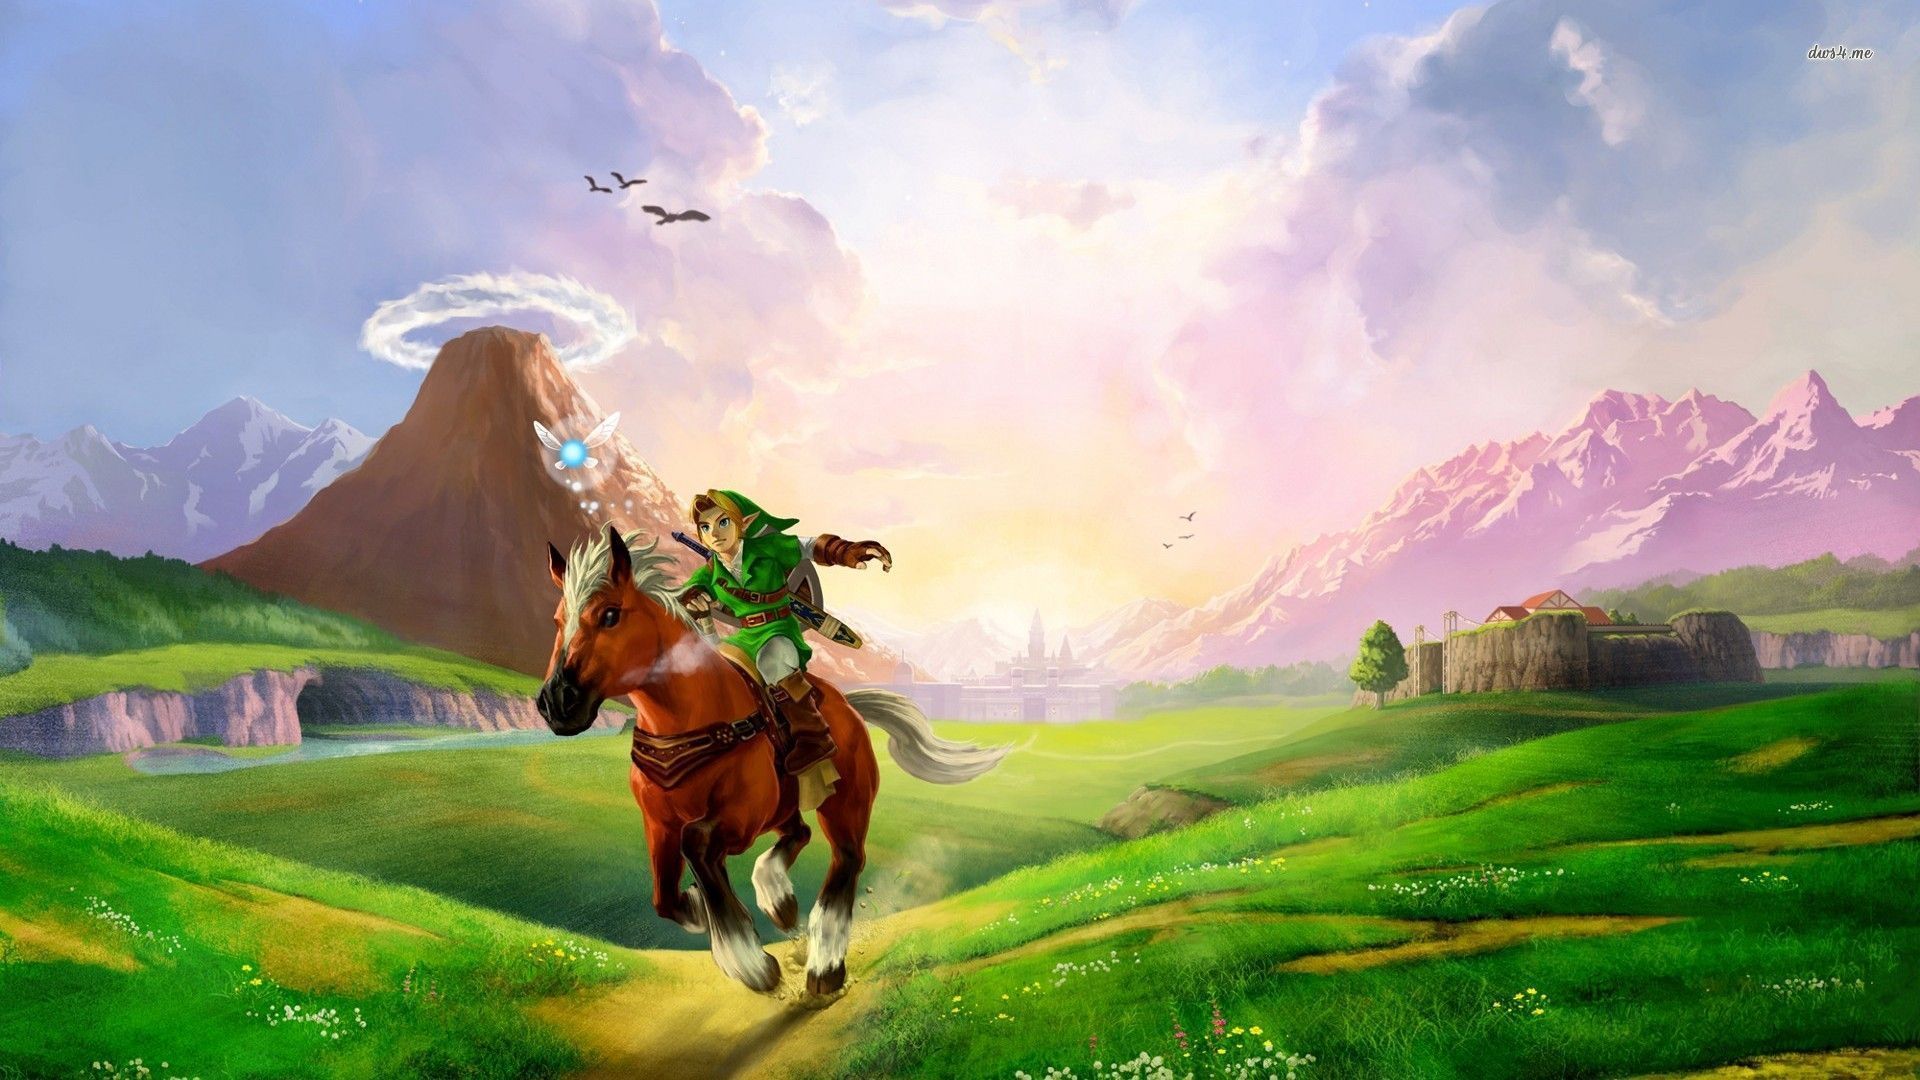 HD Quality The Legend of Zelda Wallpaper Widescreen 13 Game Full ...